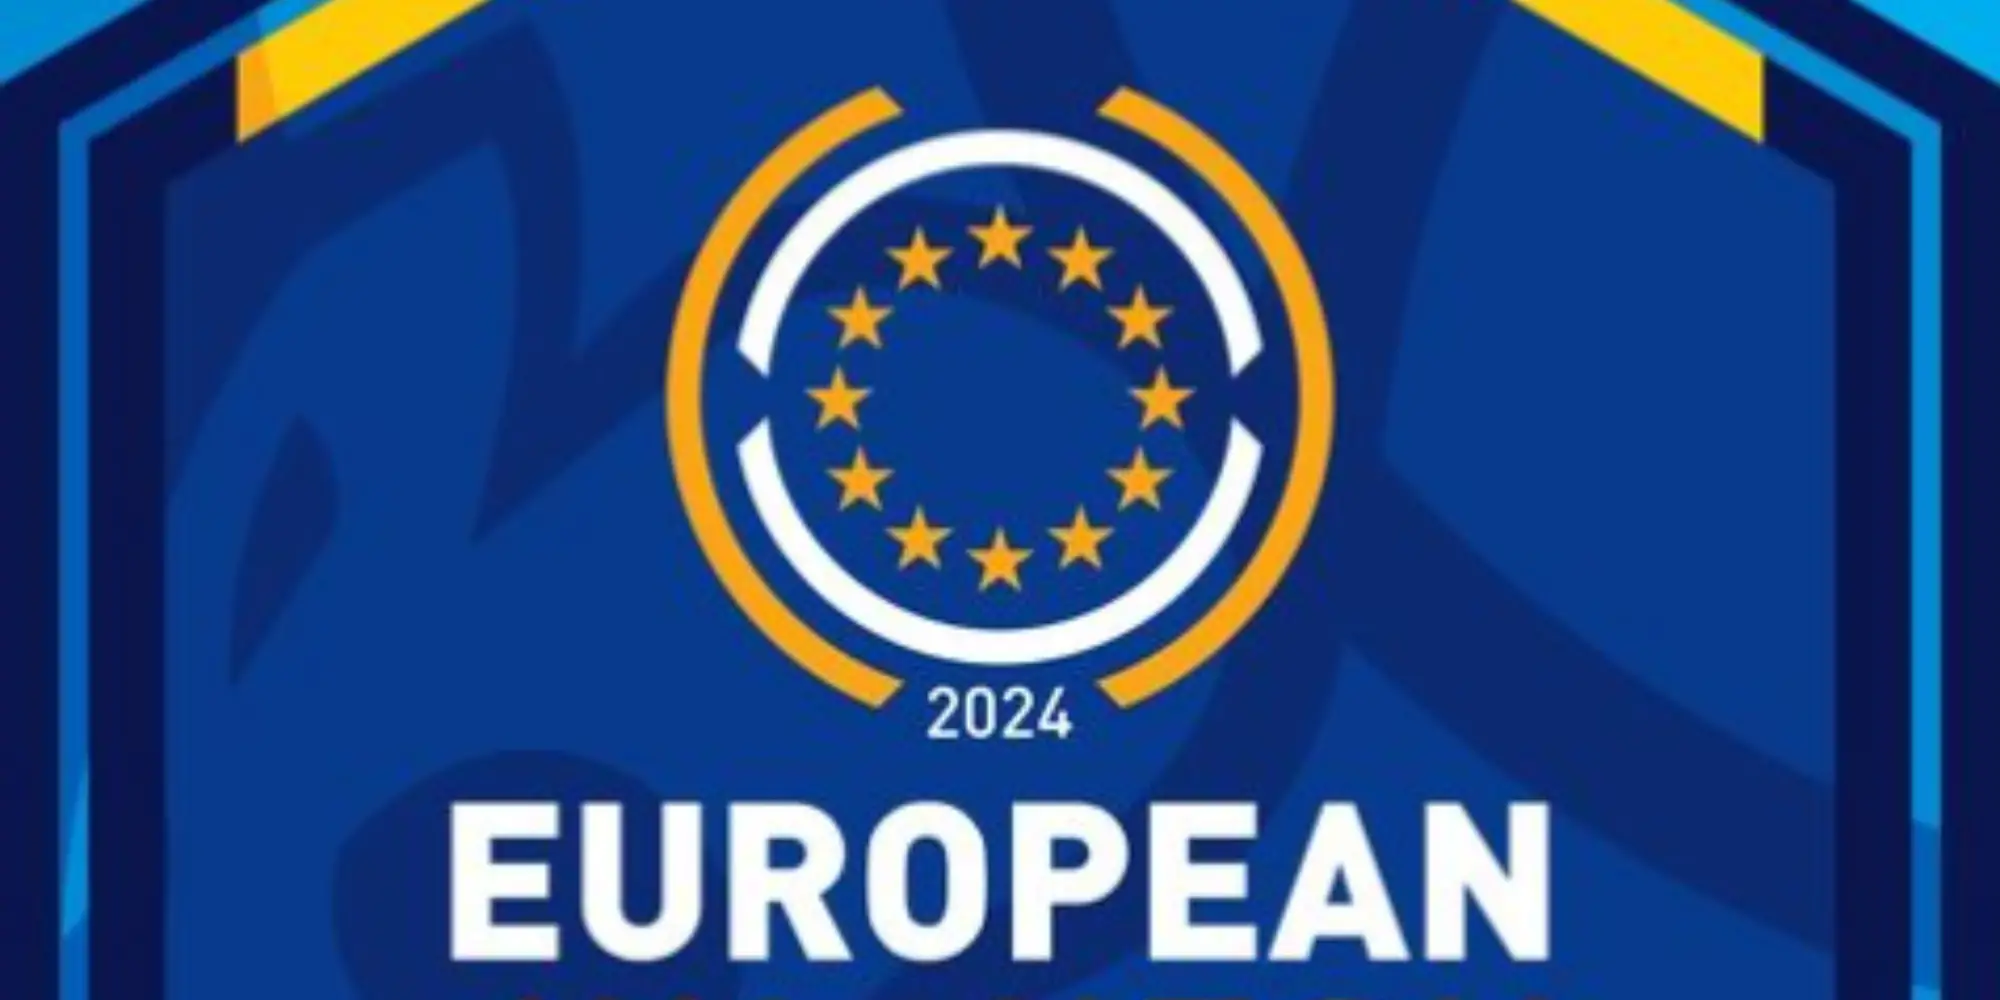 IBJJF European Championship 2024 Full Preview